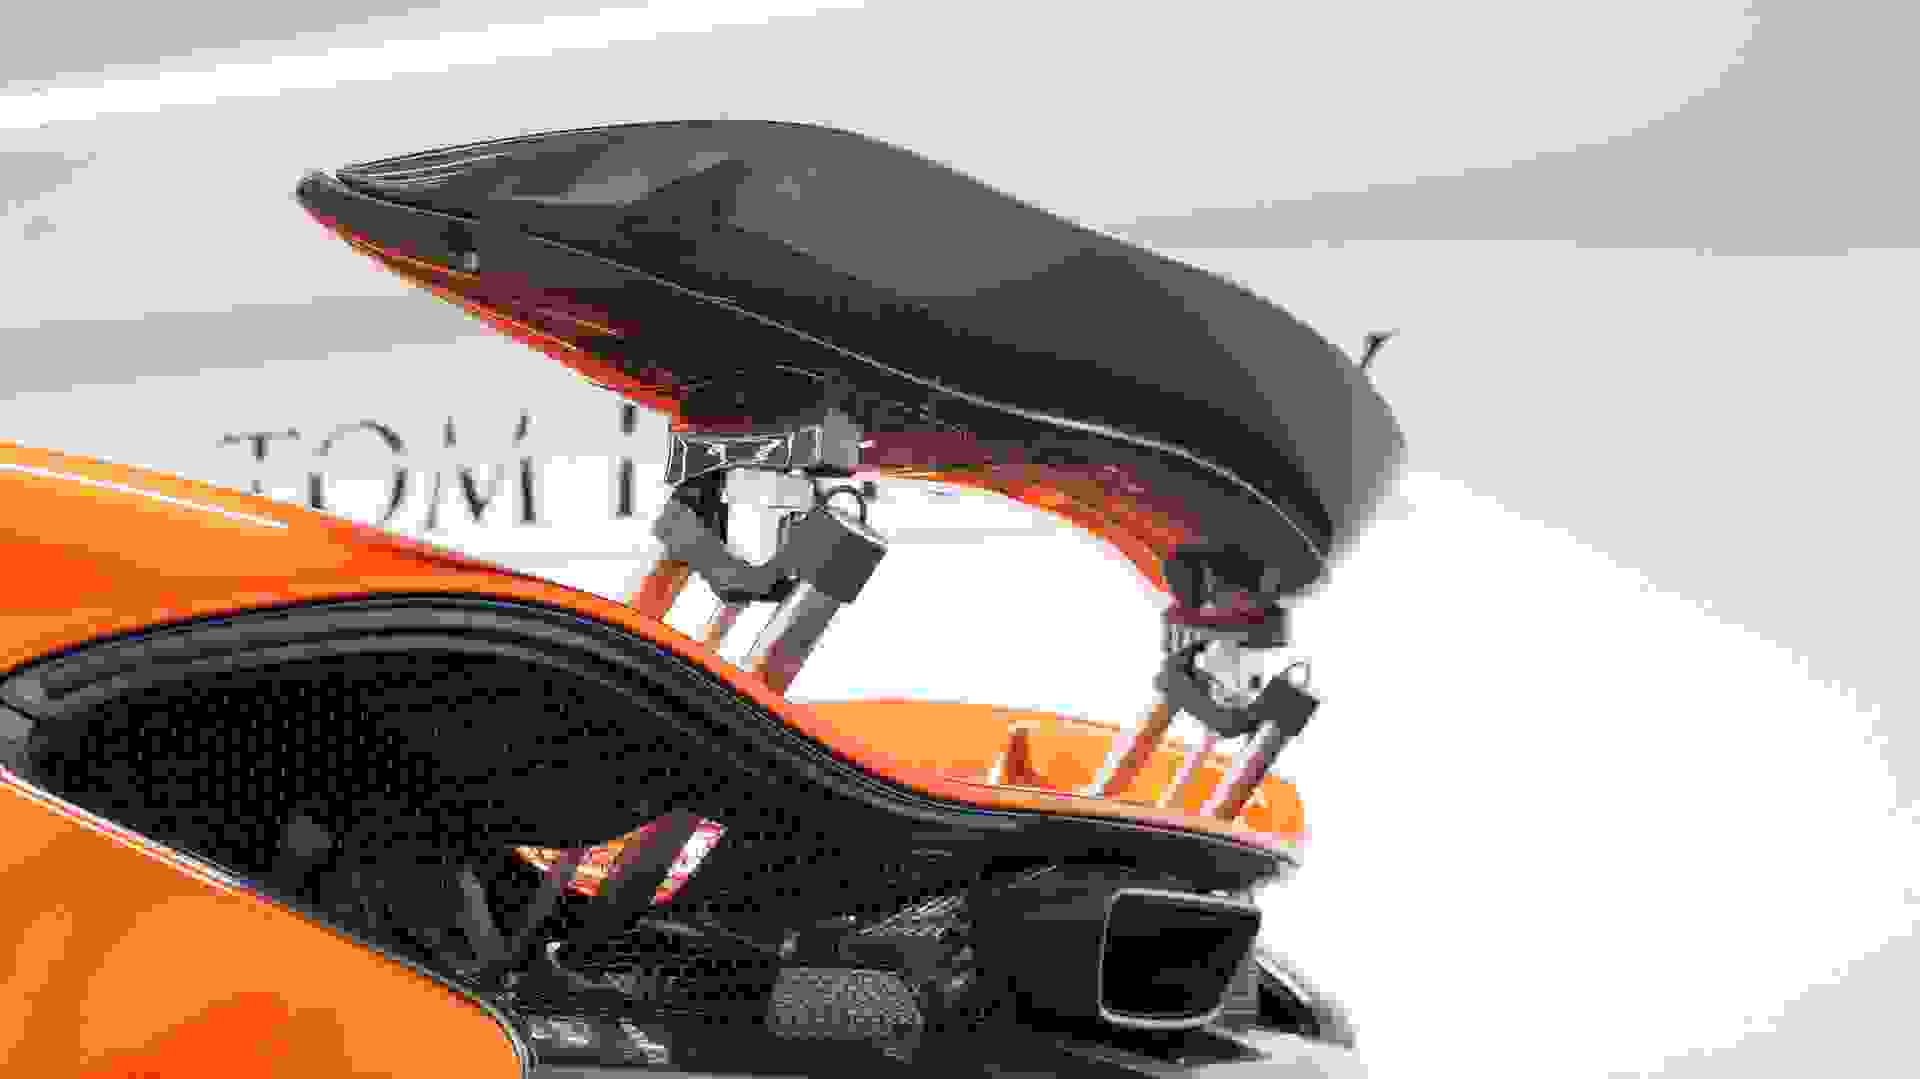 McLaren P1 Photo 722a1fd9-9cbf-46b0-8082-95a614e7b23f.jpg